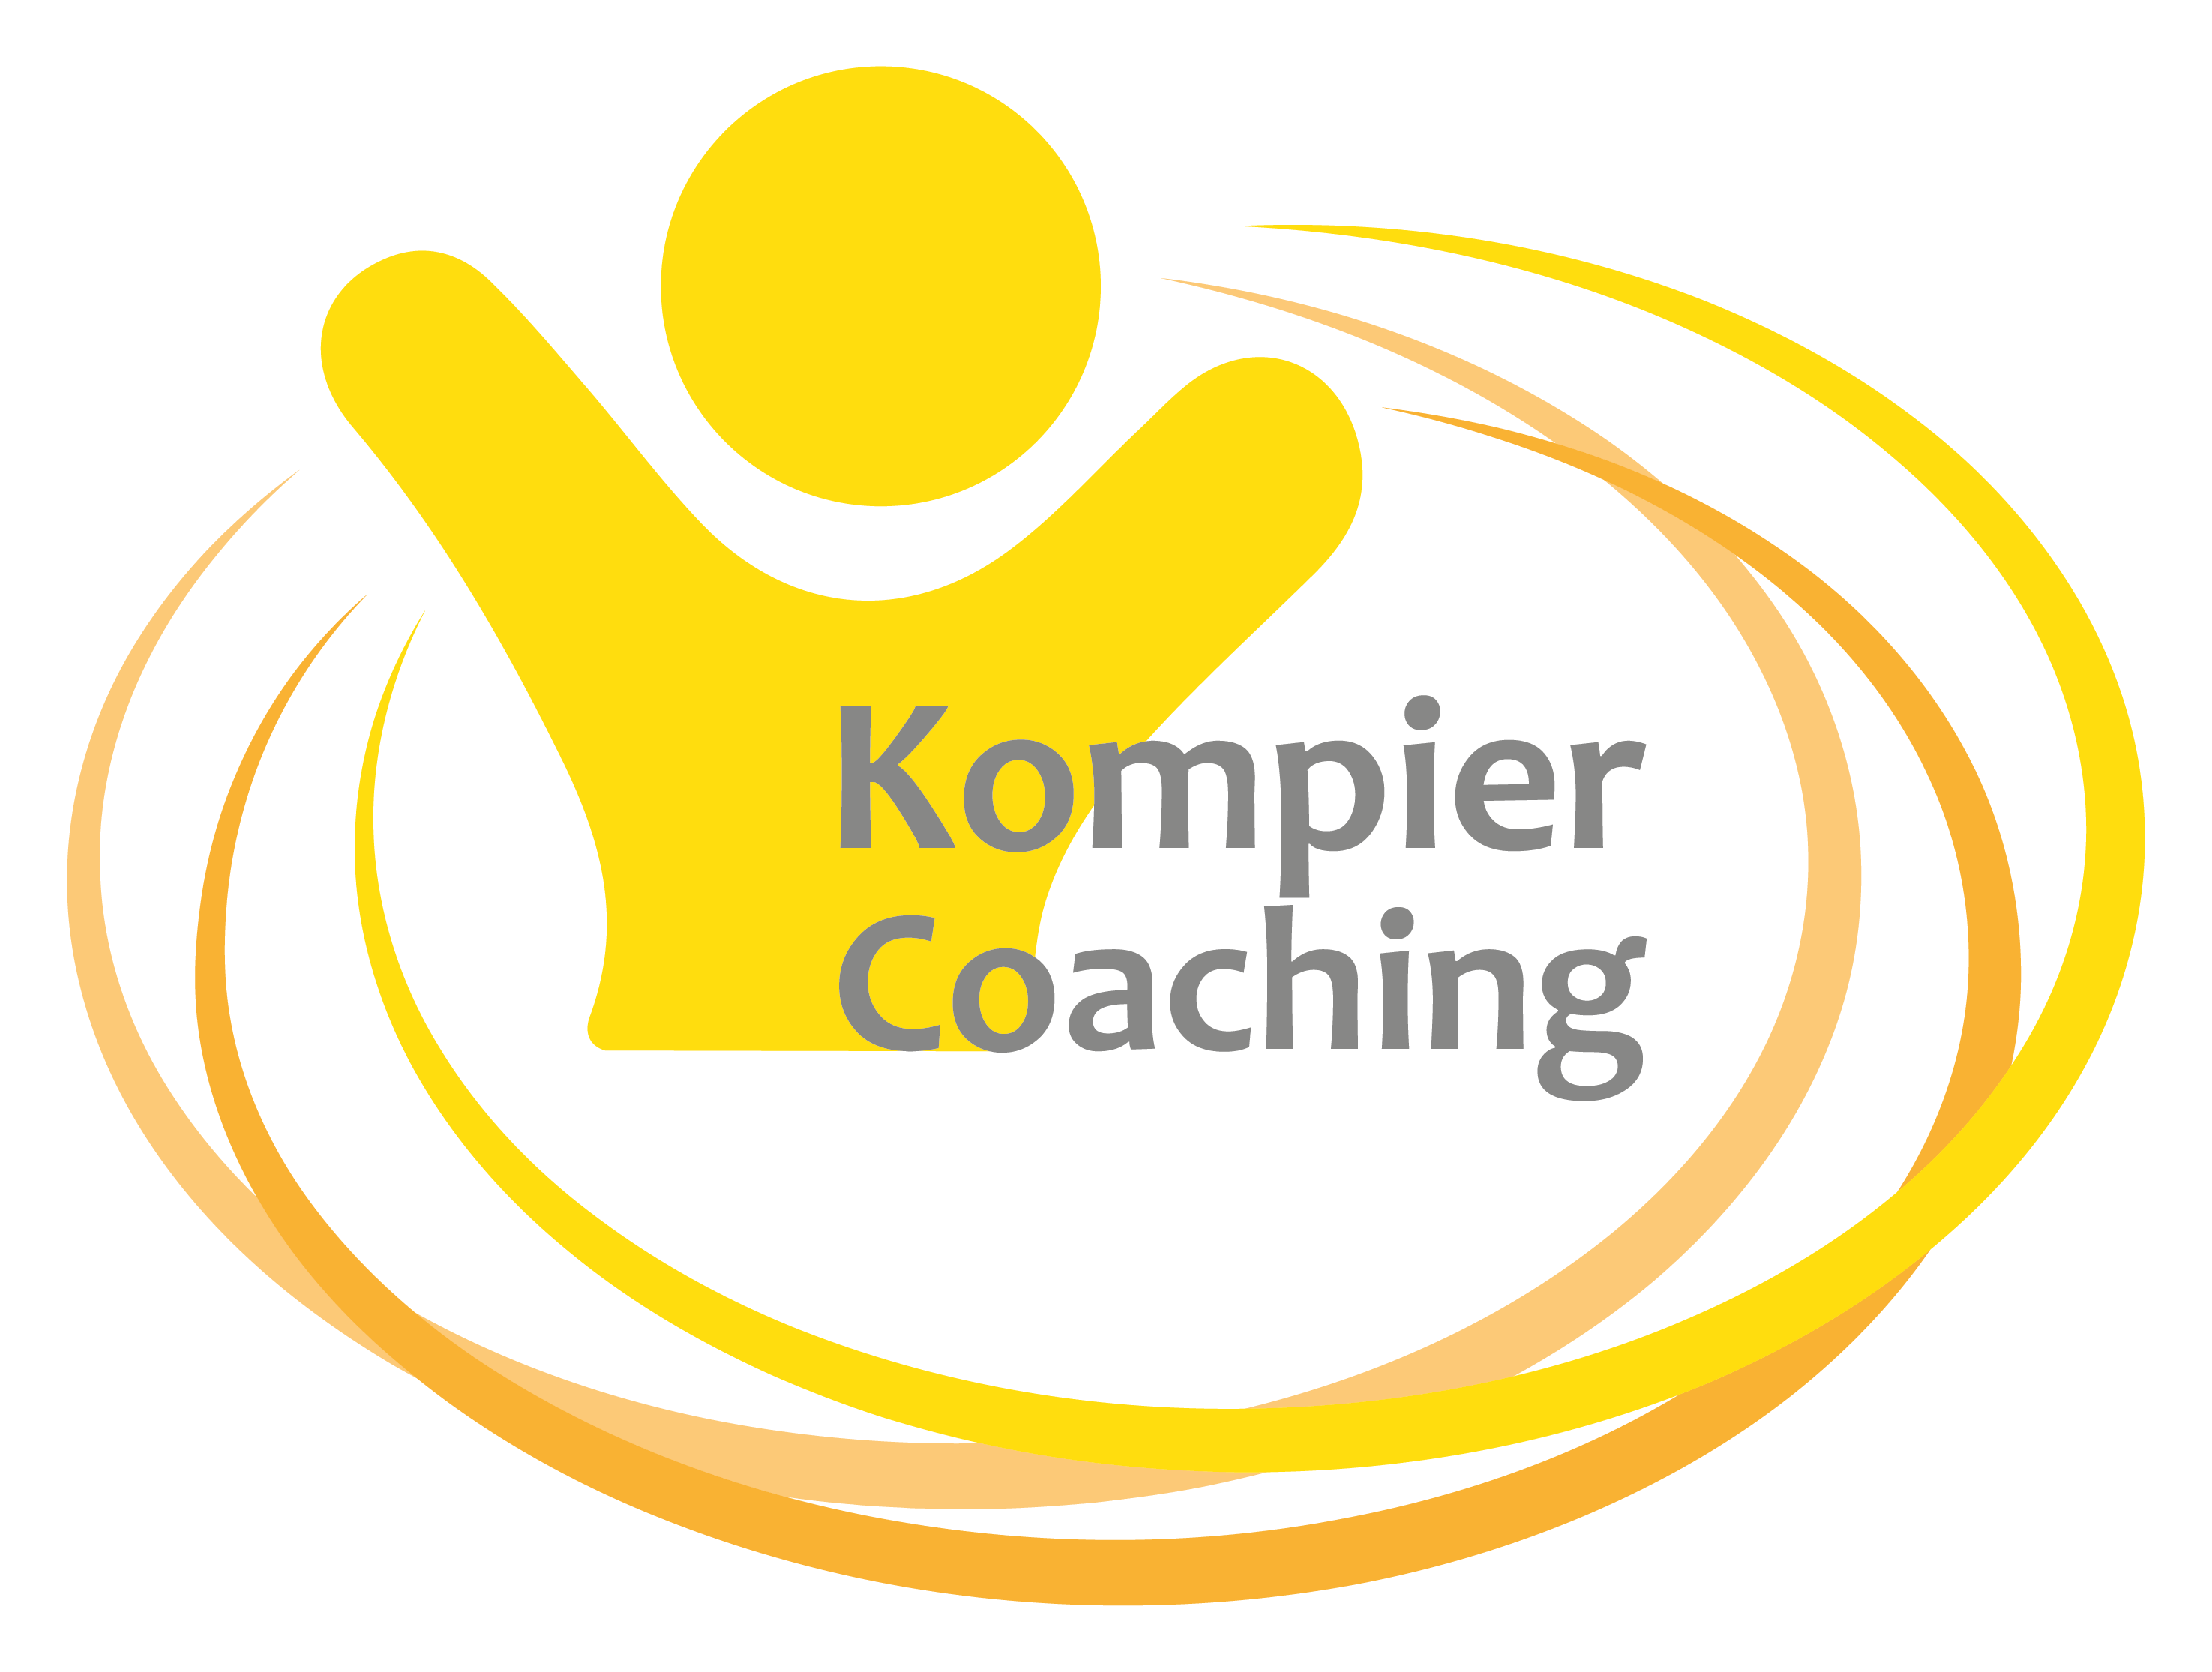 Kompier coaching